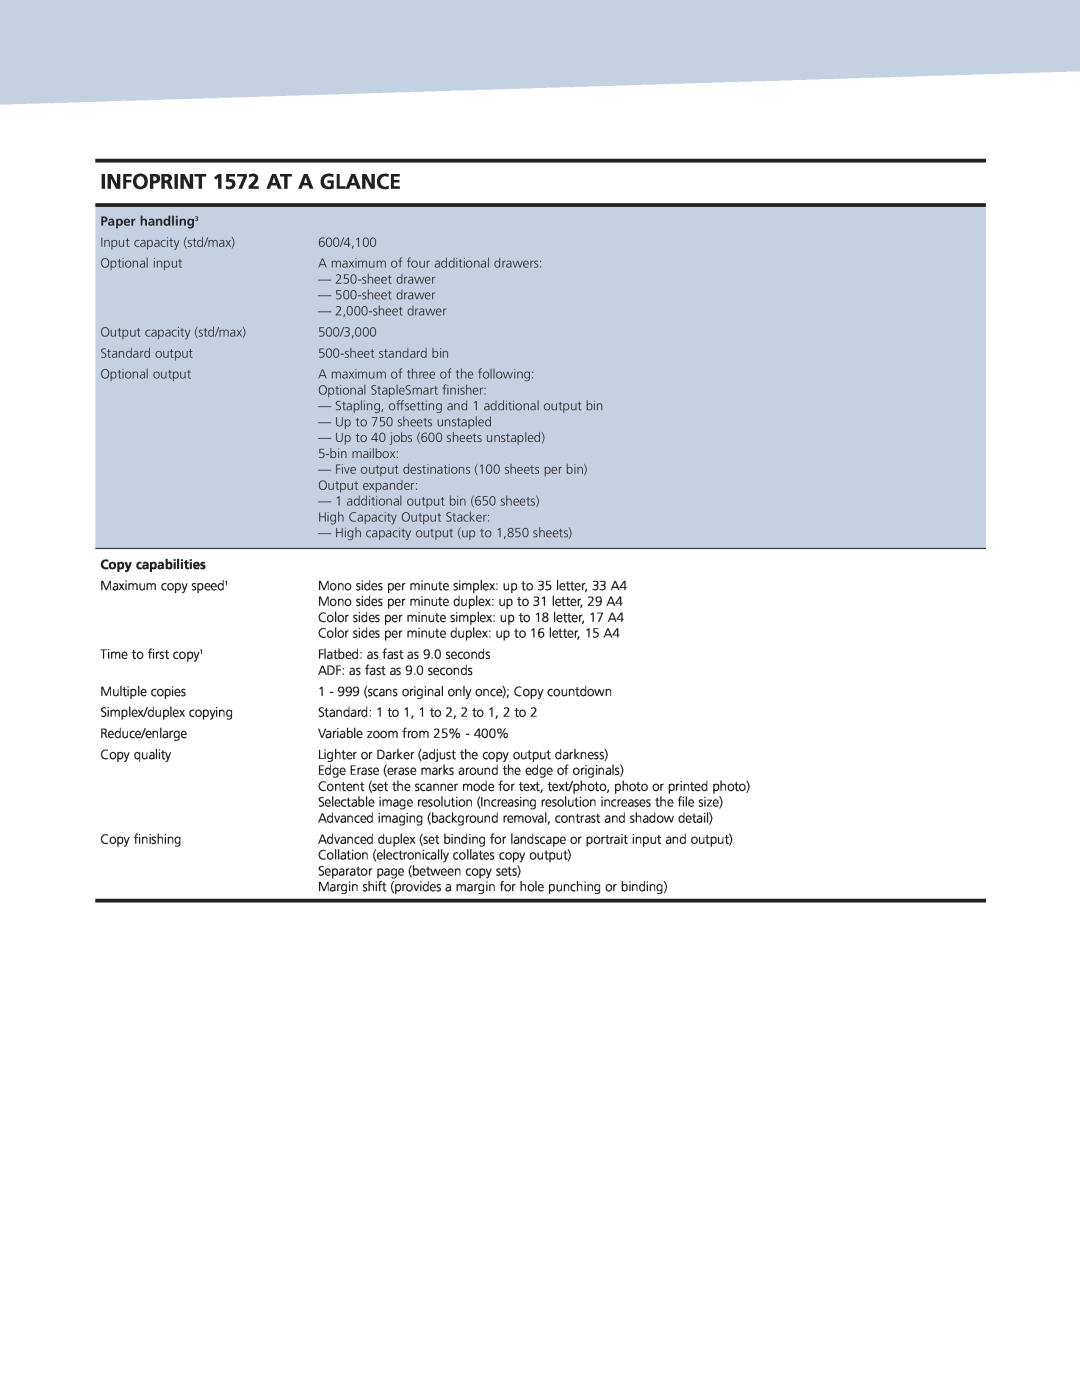 Ricoh 1572 MFP manual INFOPRINT 1572 AT A GLANCE, Paper handling3, Copy capabilities 